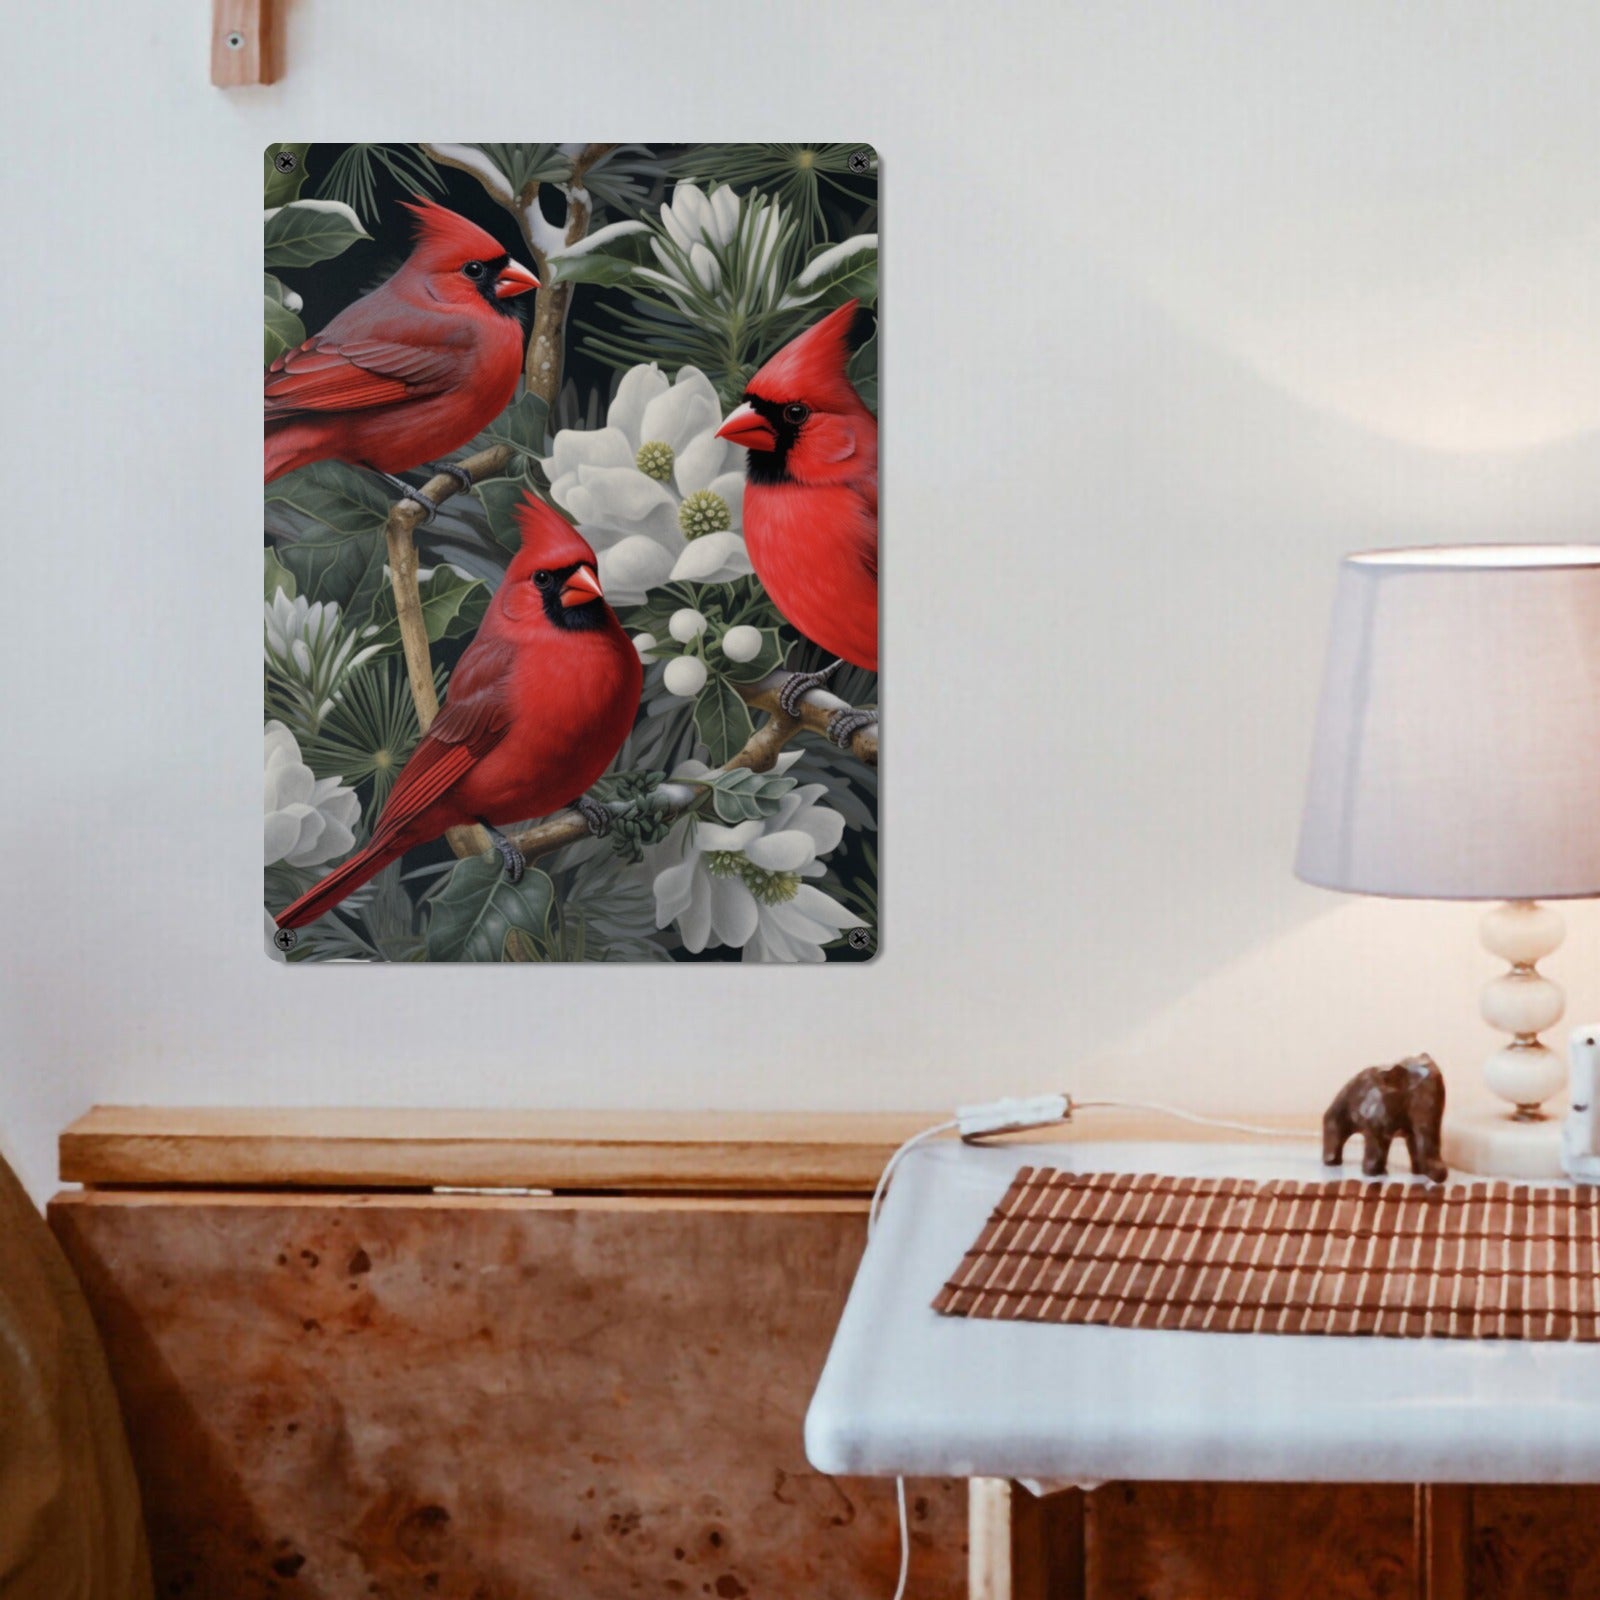 Red Cardinal Metal Sign | 12x16" Bird Wall Art | Indoor/Outdoor Decor by MIWallArt